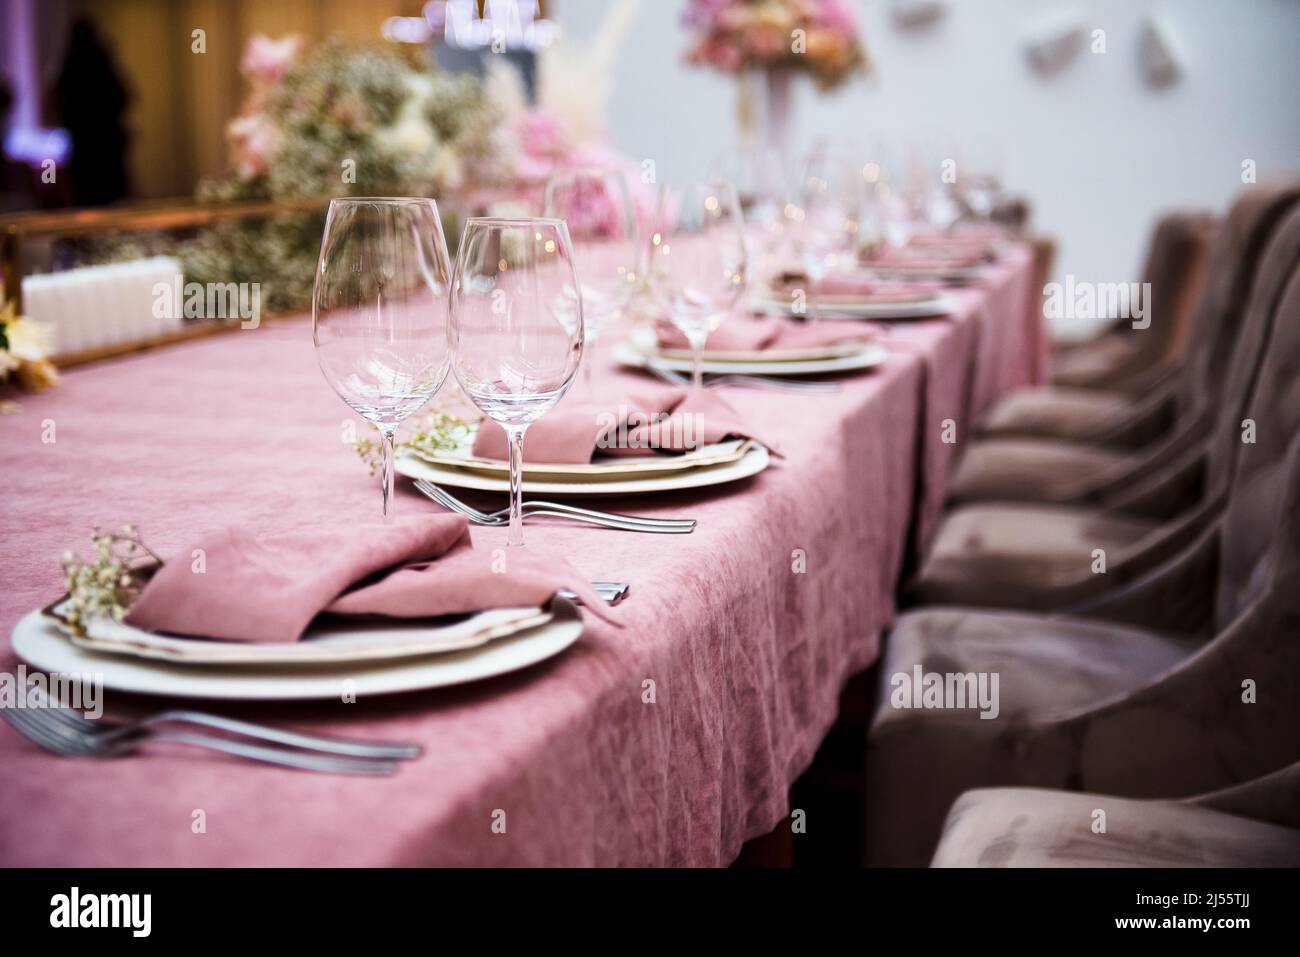 Beautiful table set with plates, empty wineglasses, pink napkins, and cutlery. Elegant stylish decor adding sophistication to wedding interior. Stock Photo